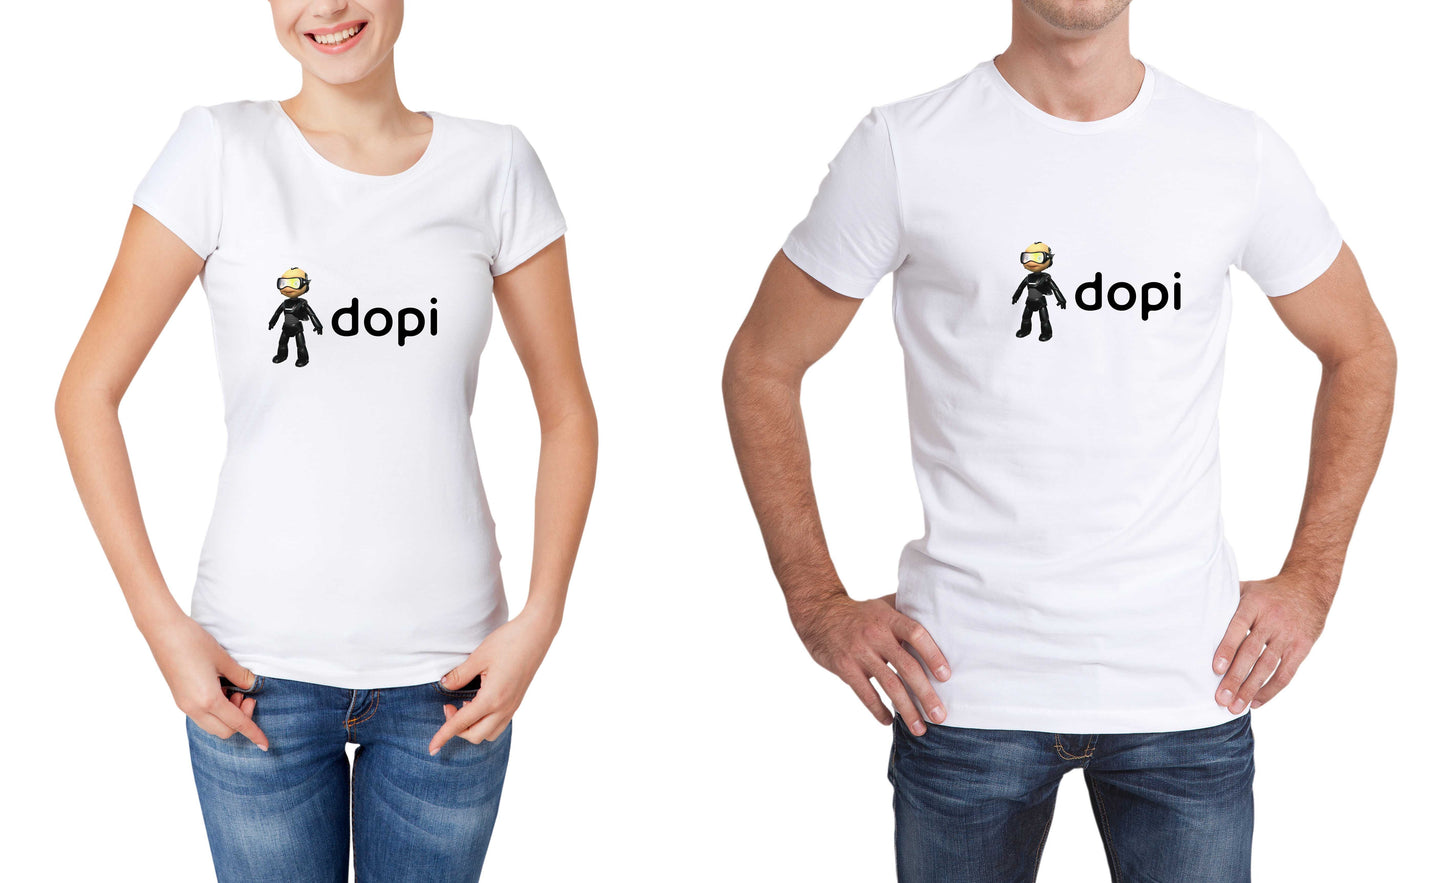 Dopi Unisex Shirt for Adult